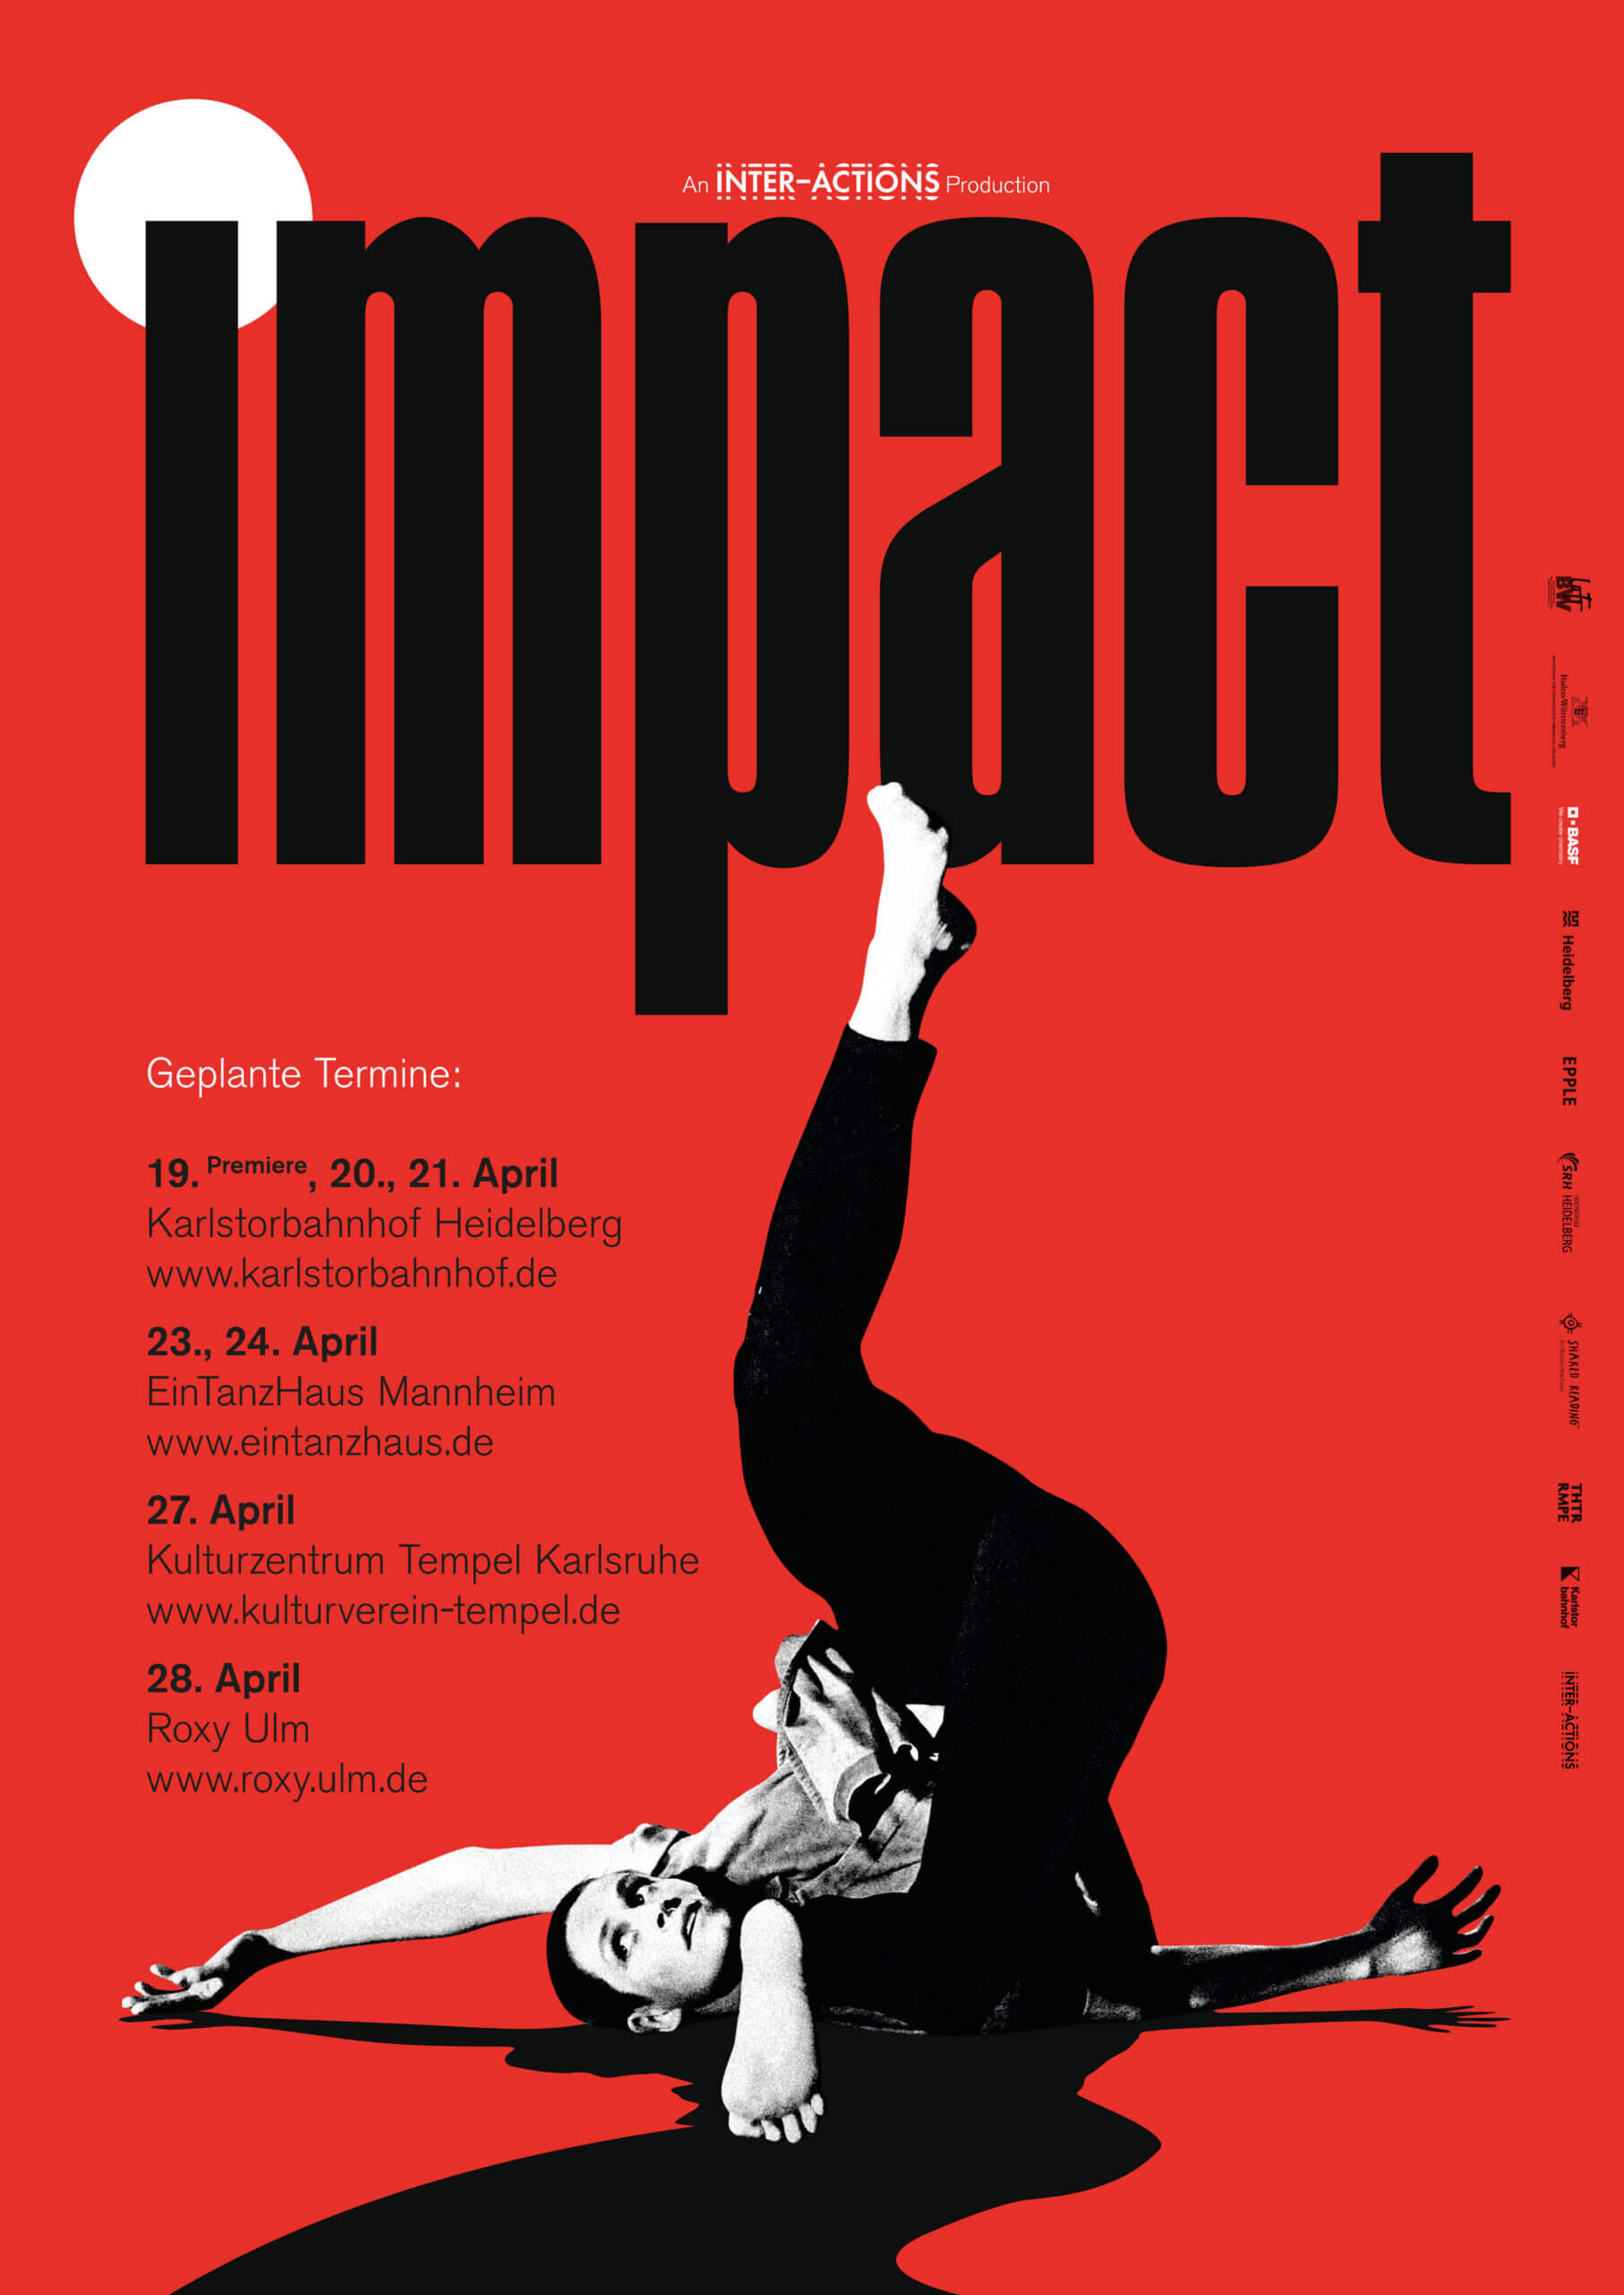 Impact Poster